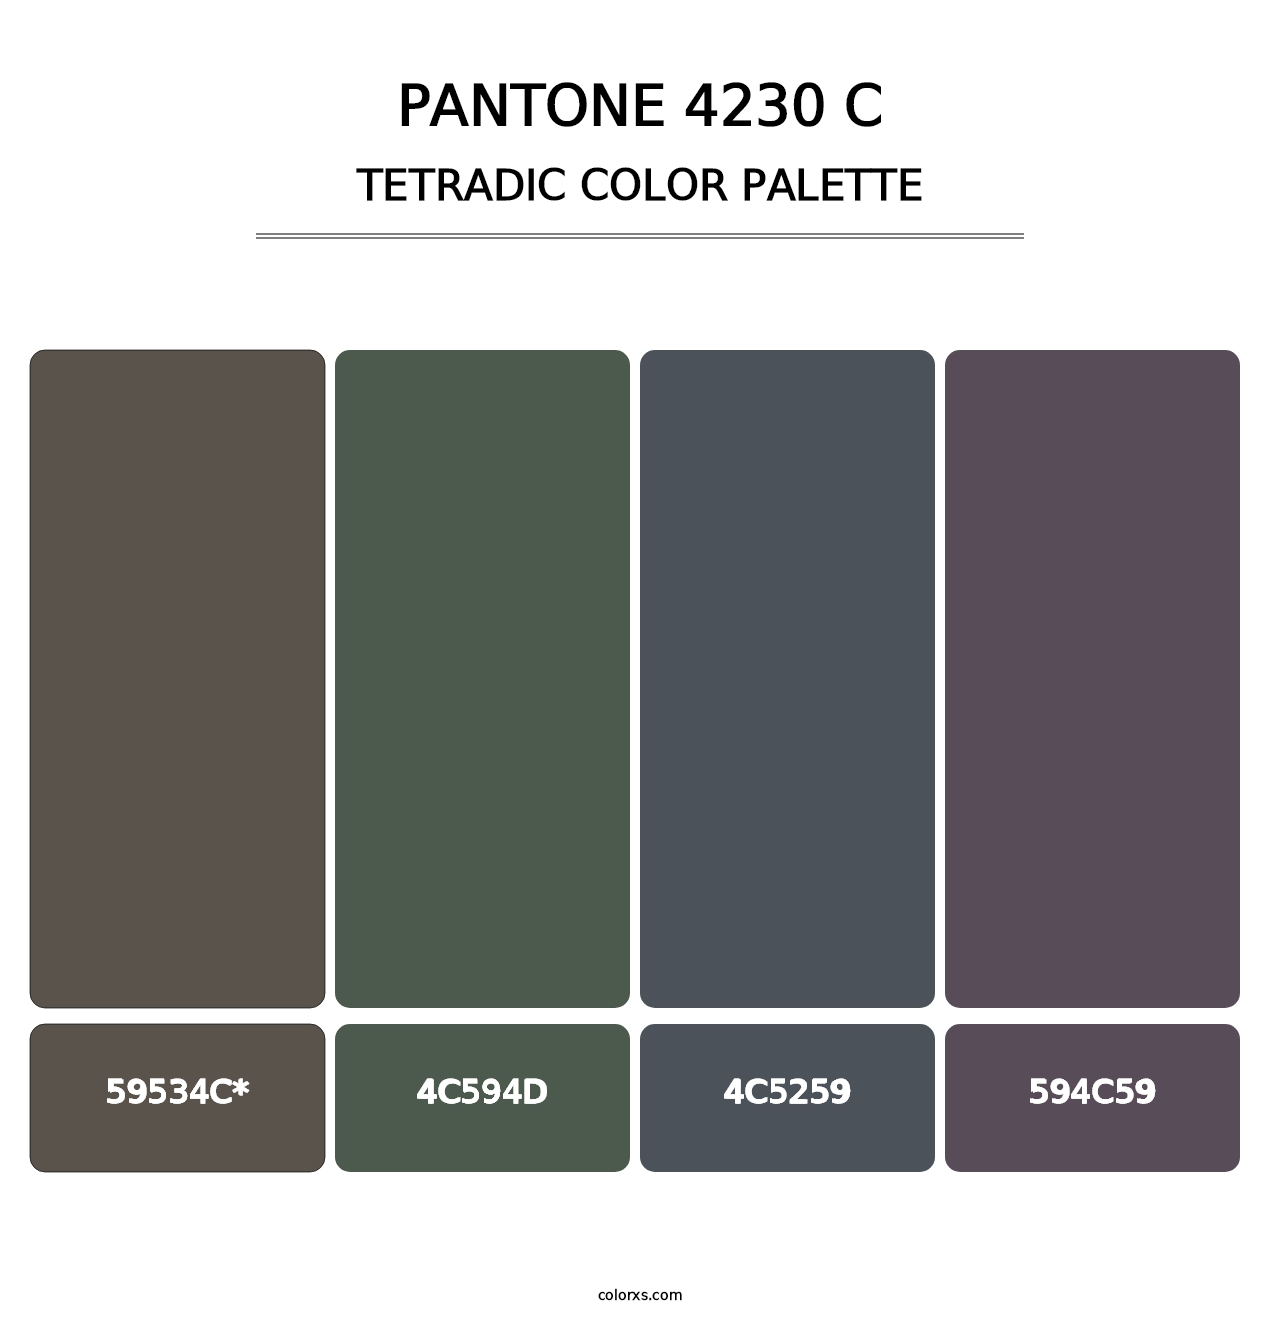 PANTONE 4230 C - Tetradic Color Palette